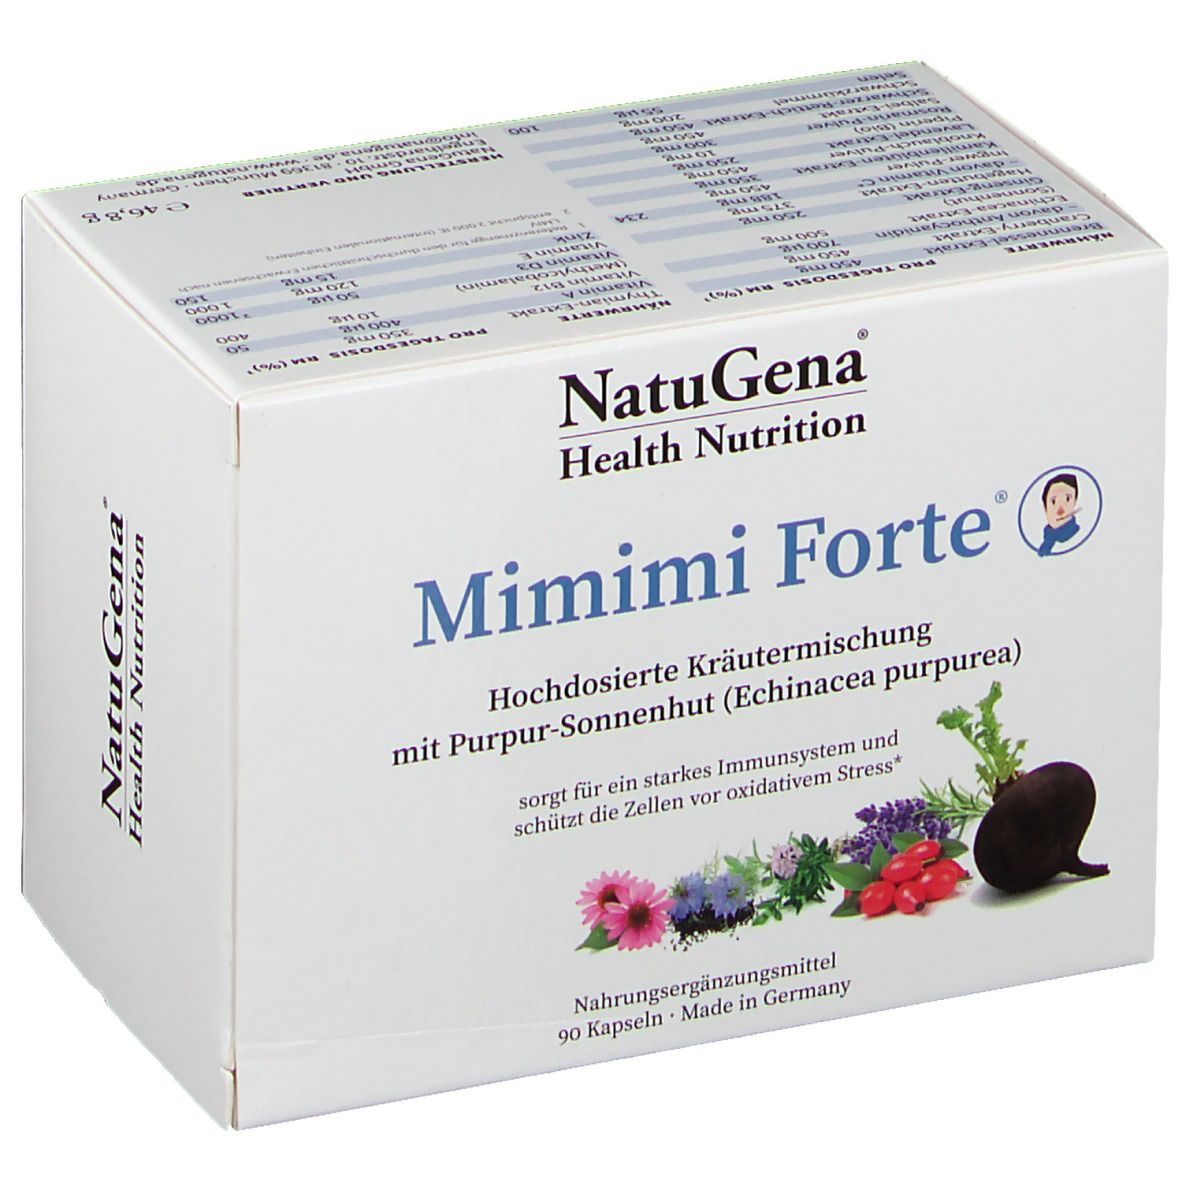 Mimimi Forte®